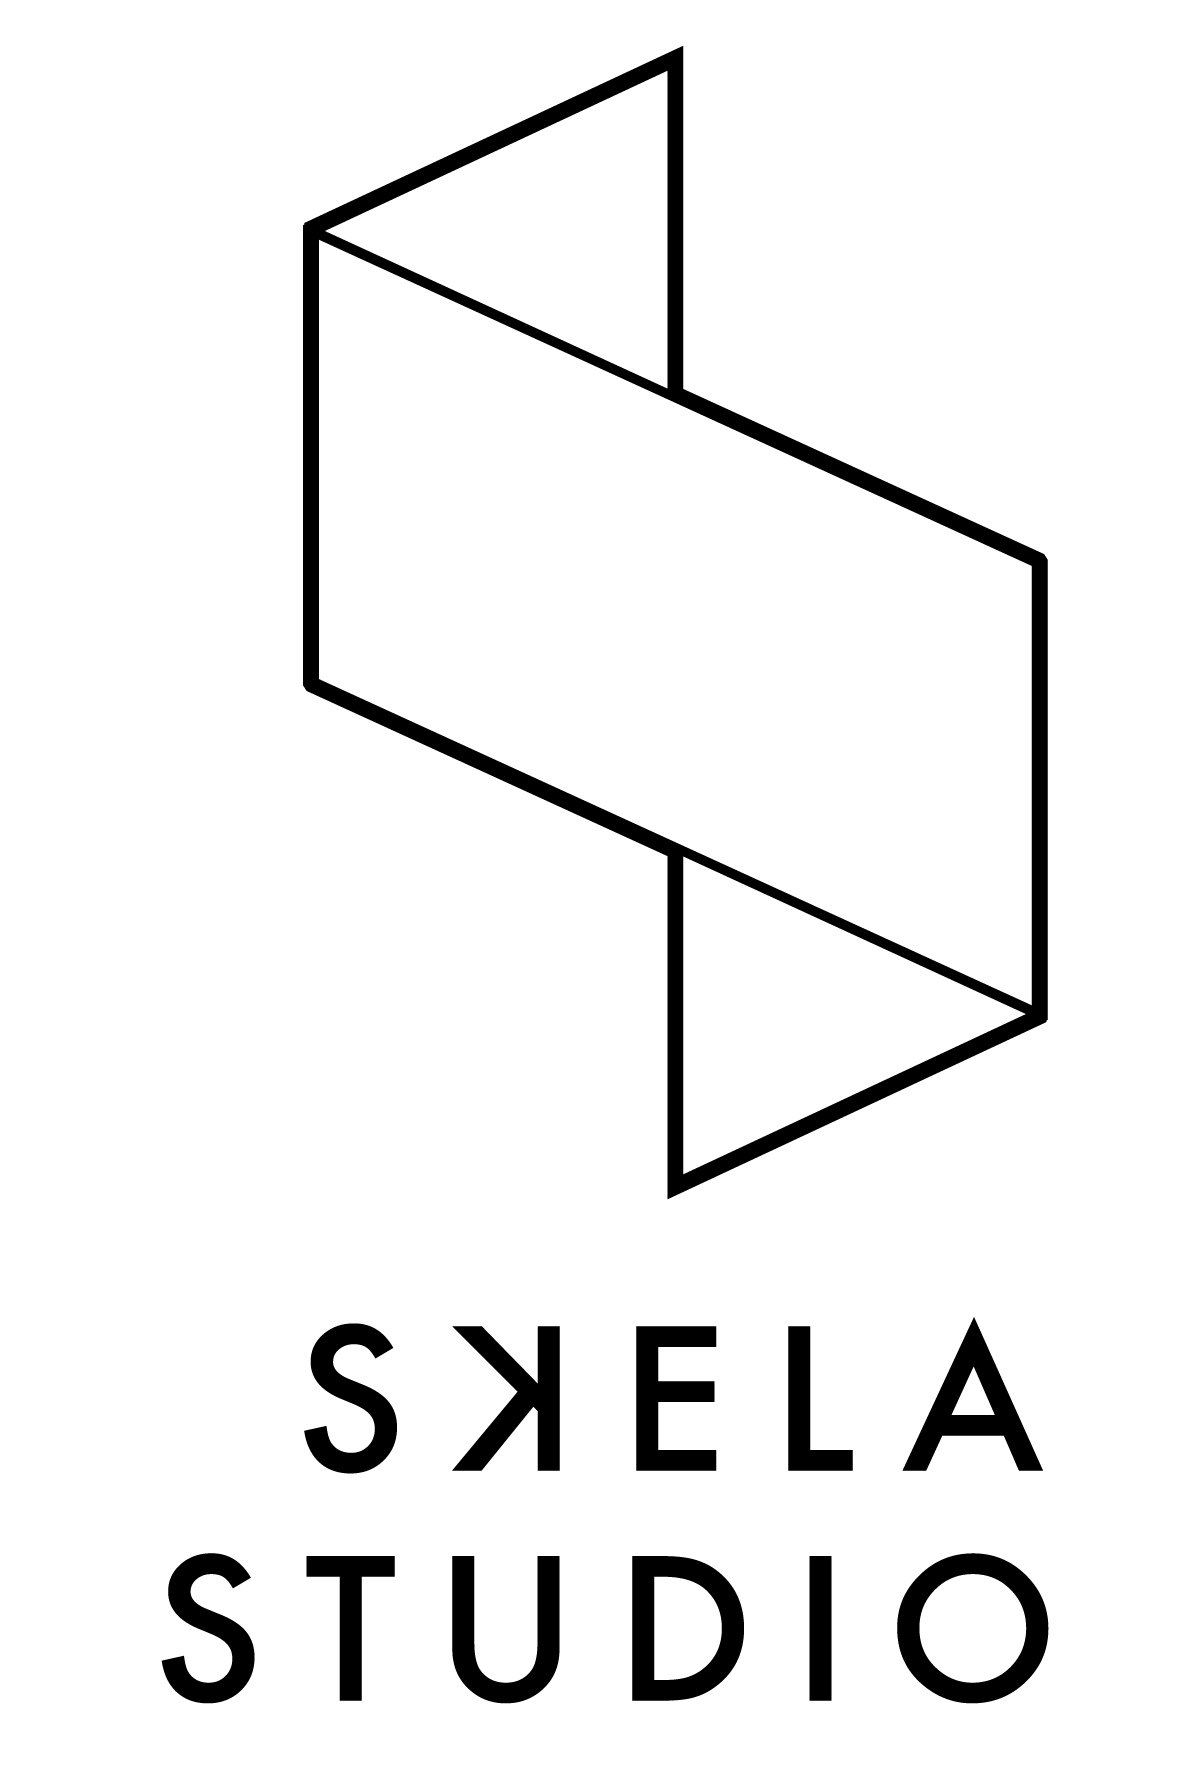 SKELA STUDIO logo